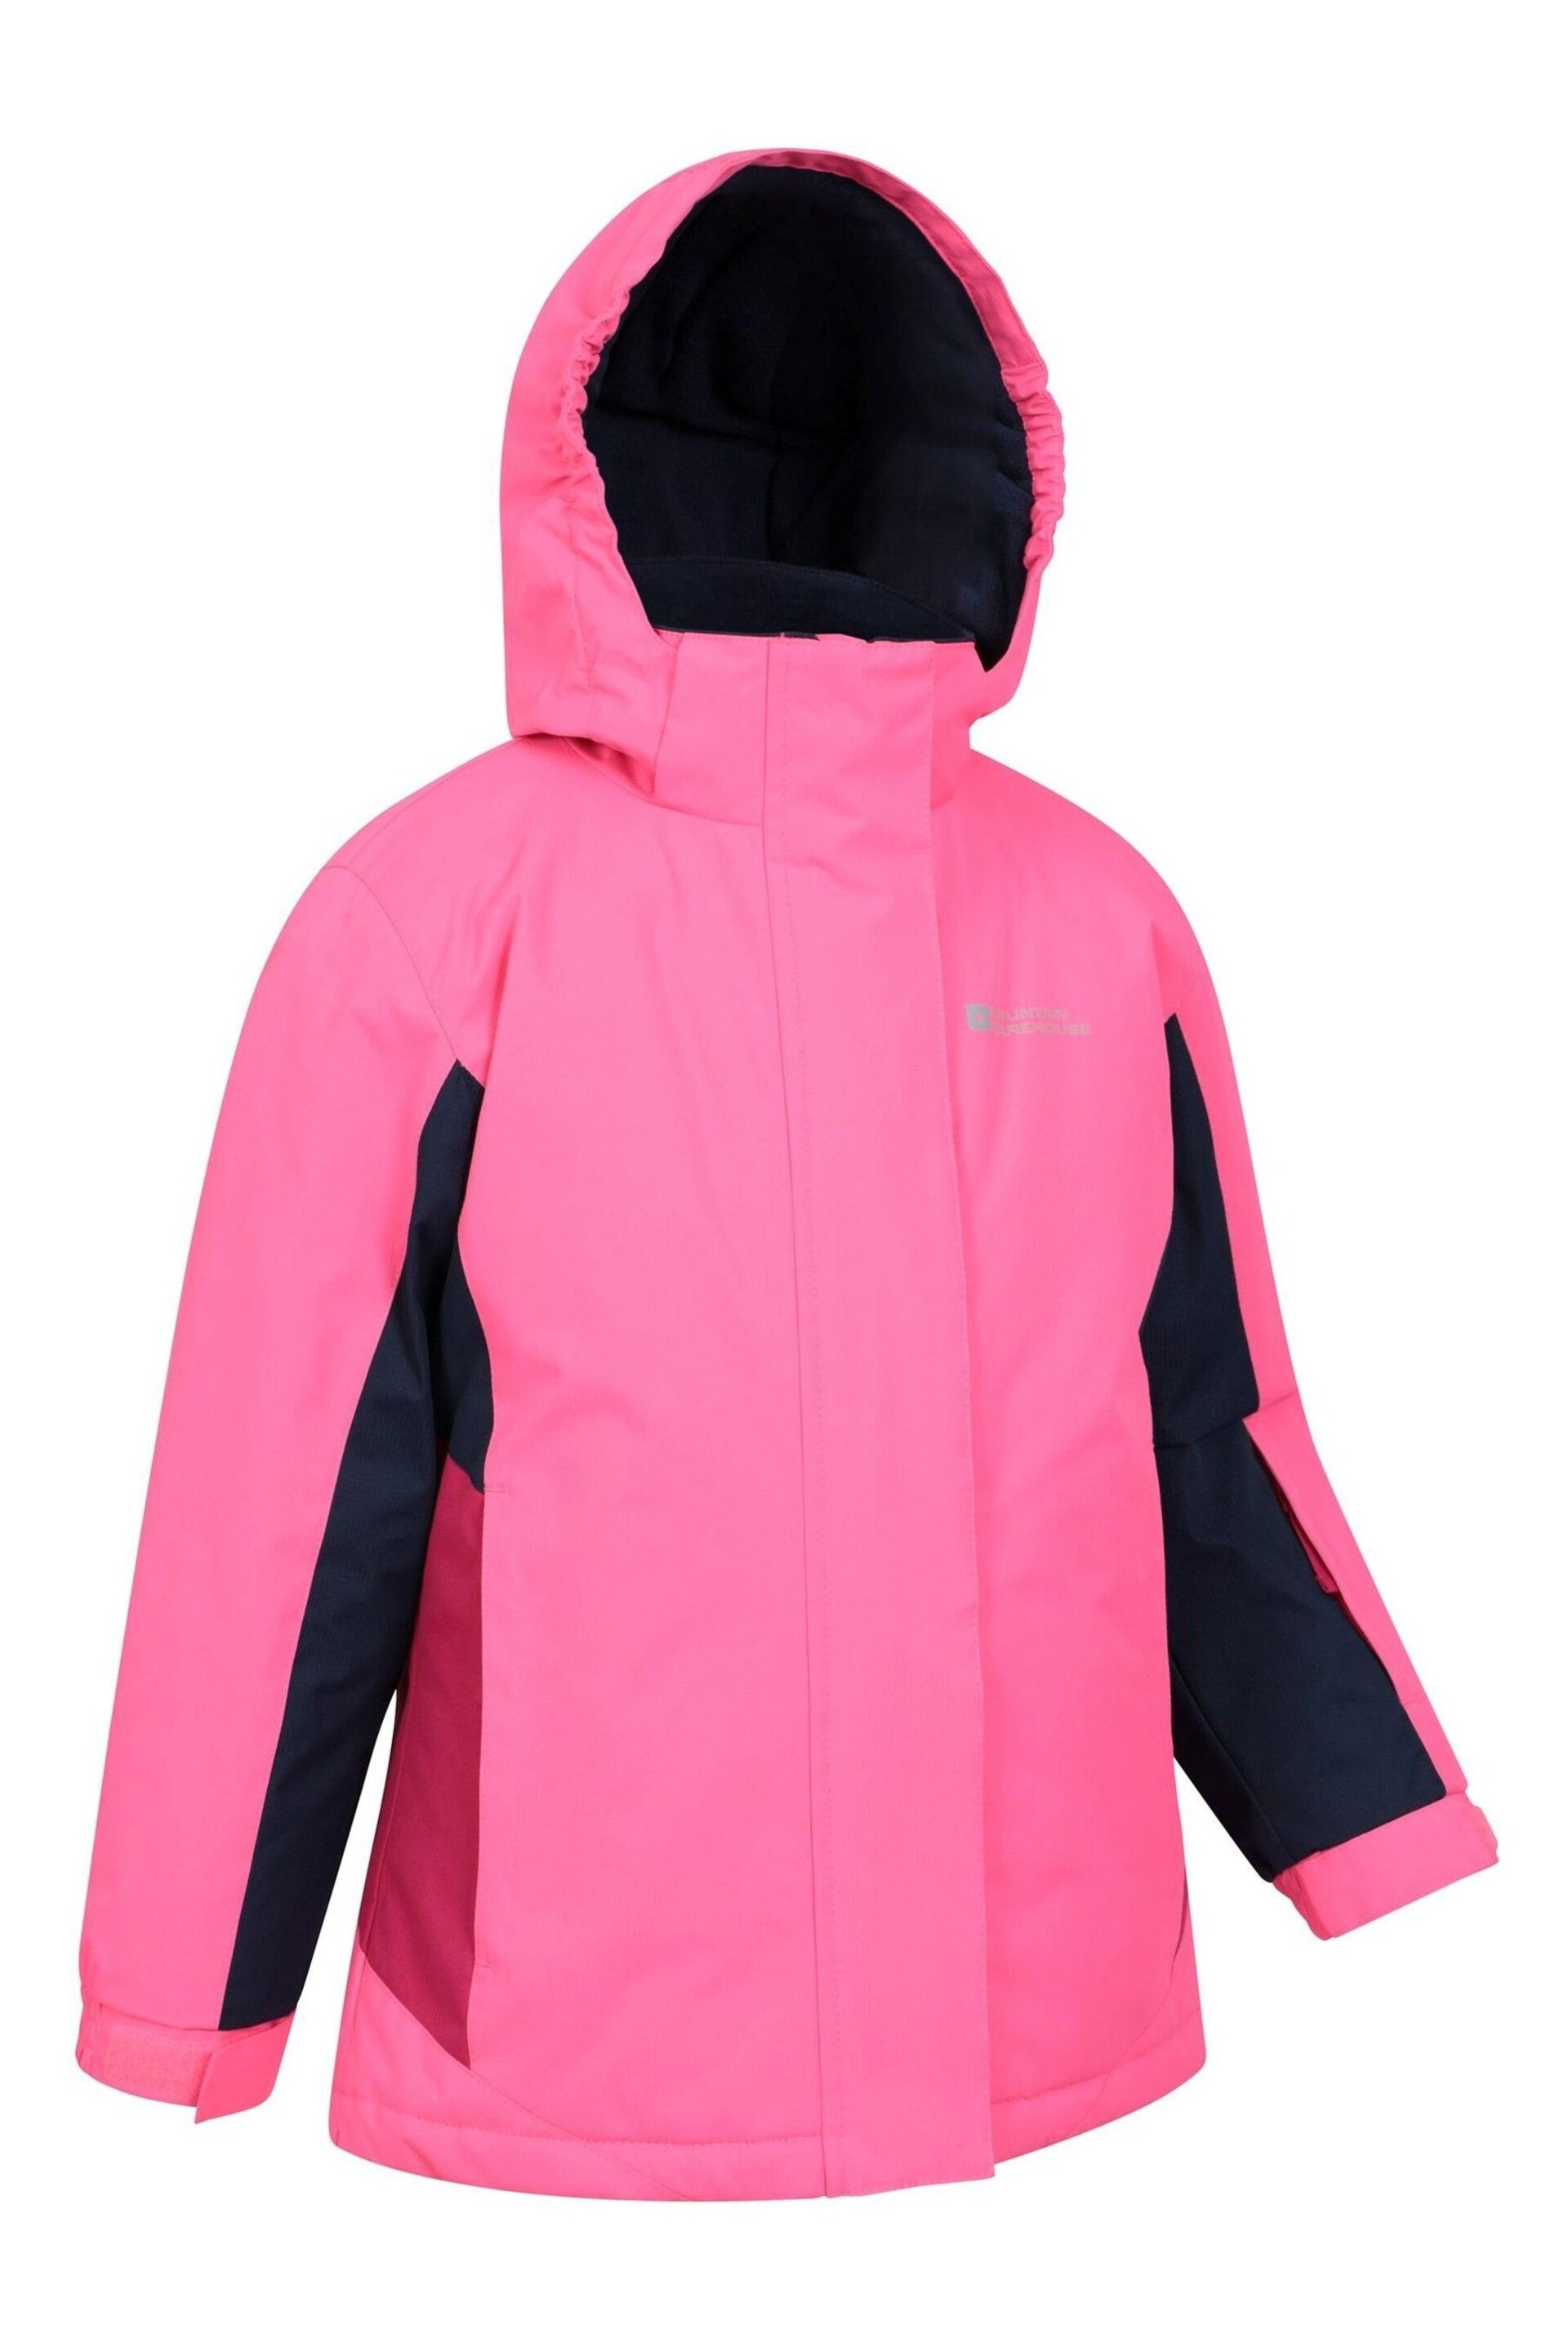 Mountain Warehouse Pink Kids Honey Ski Jacket - Image 3 of 5